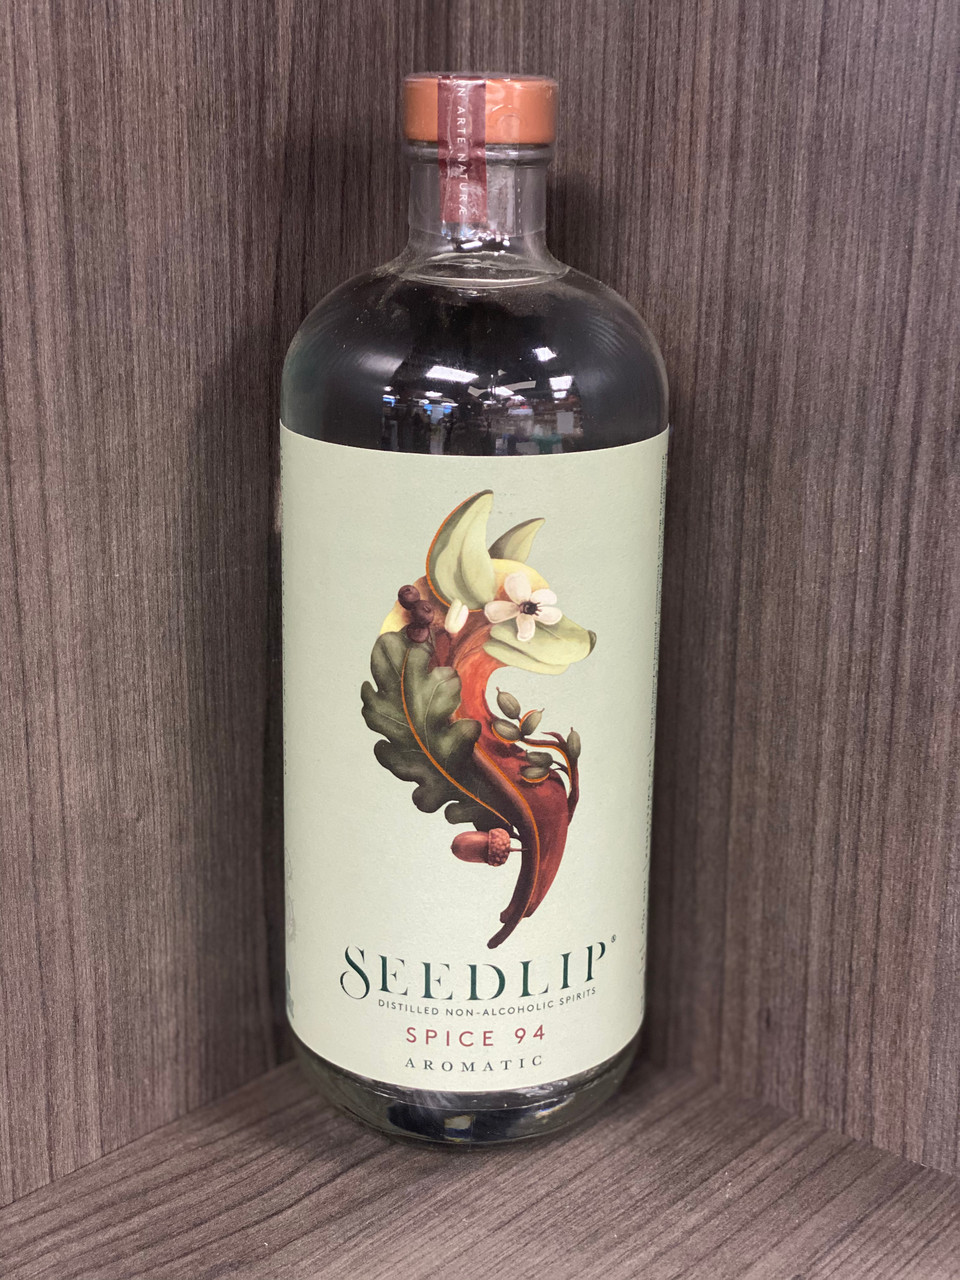 SEEDLIP SPICE 94 AROMATIC DISTILLED NON-ALCOHOLIC SPIRITS 750 ML